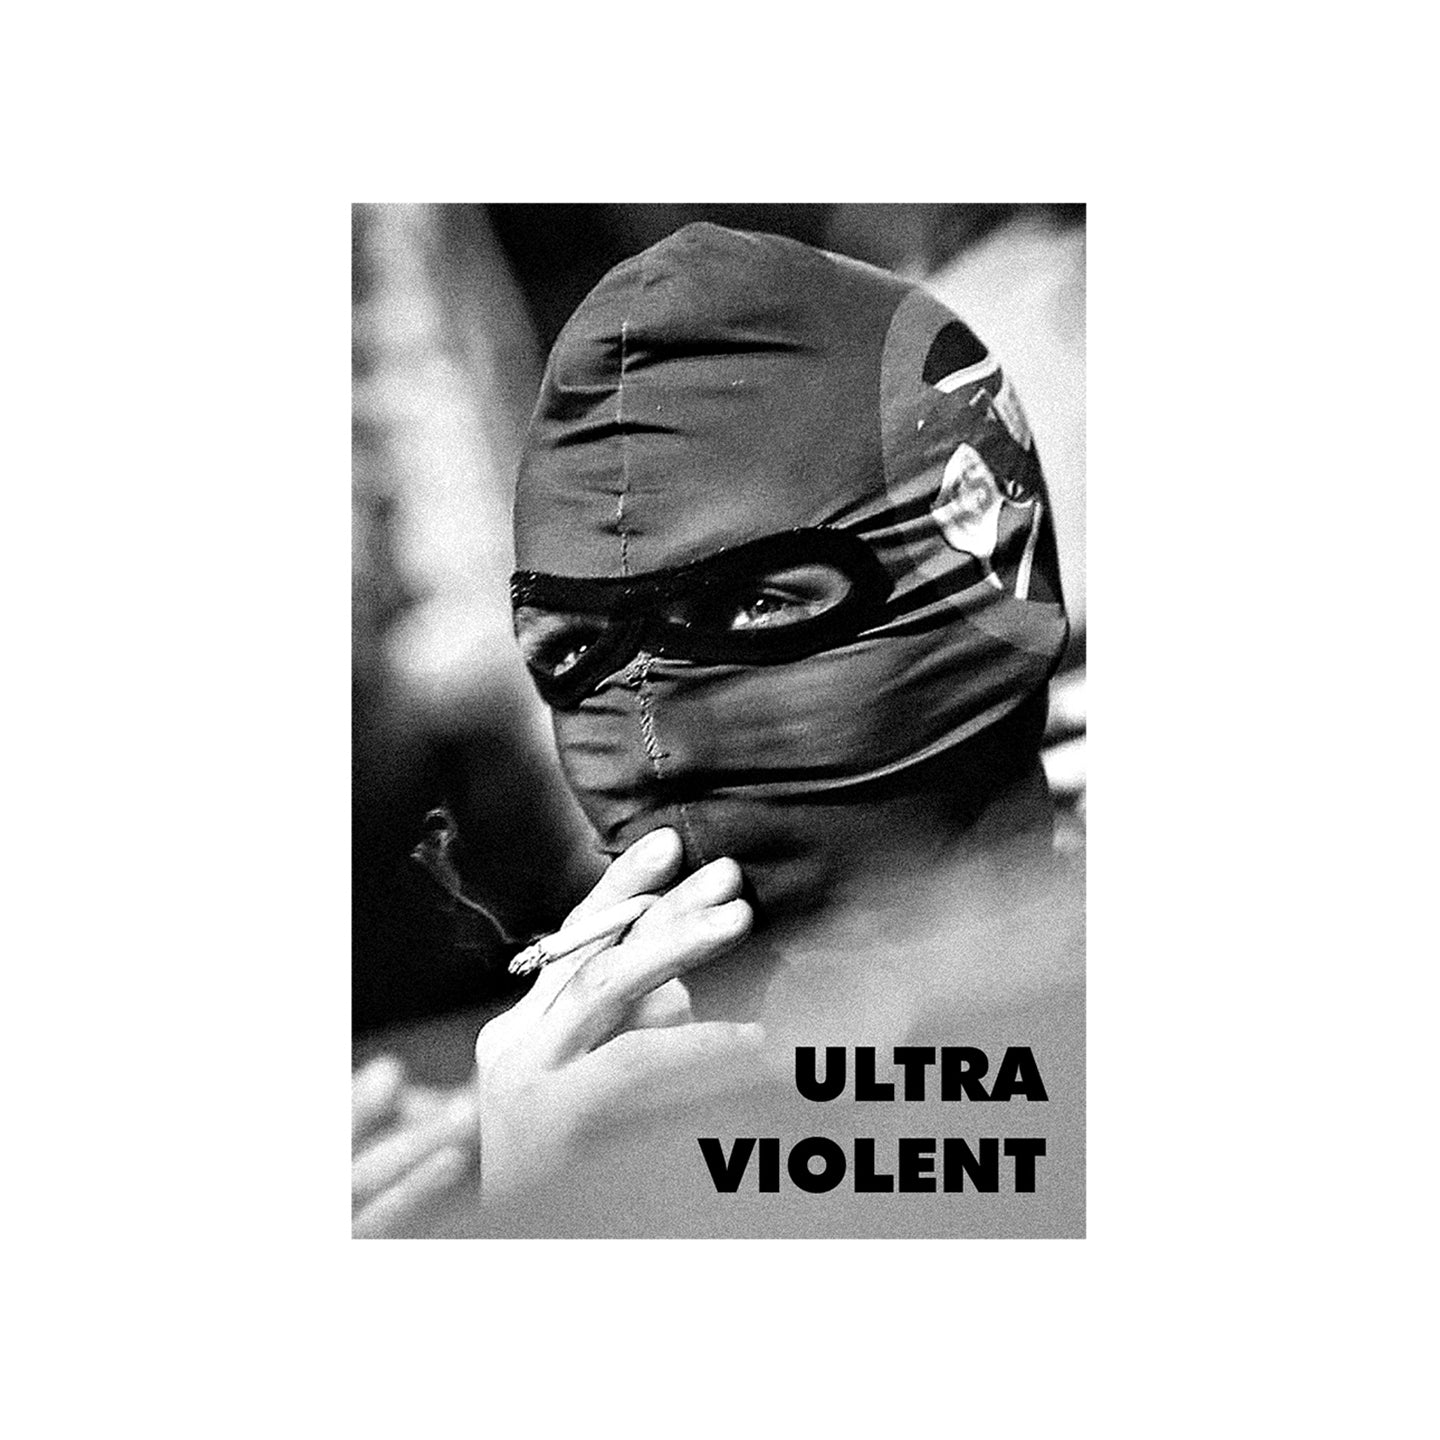 ULTRA VIOLENT